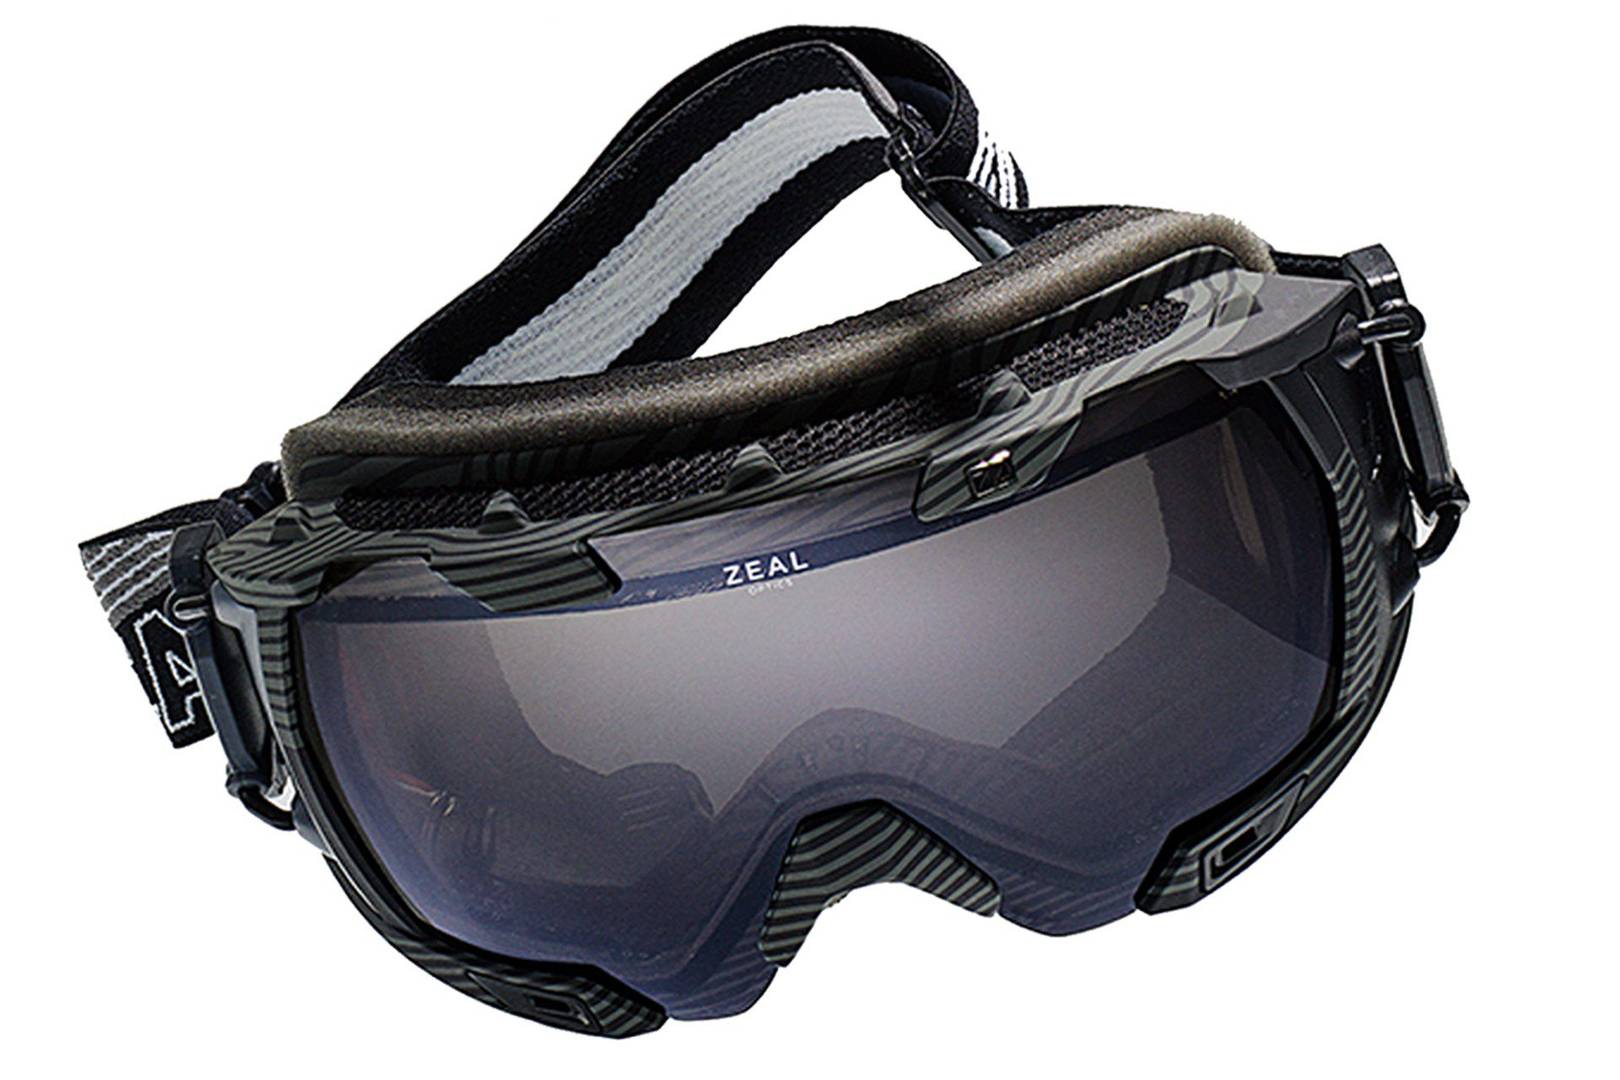 ski goggles heads up display